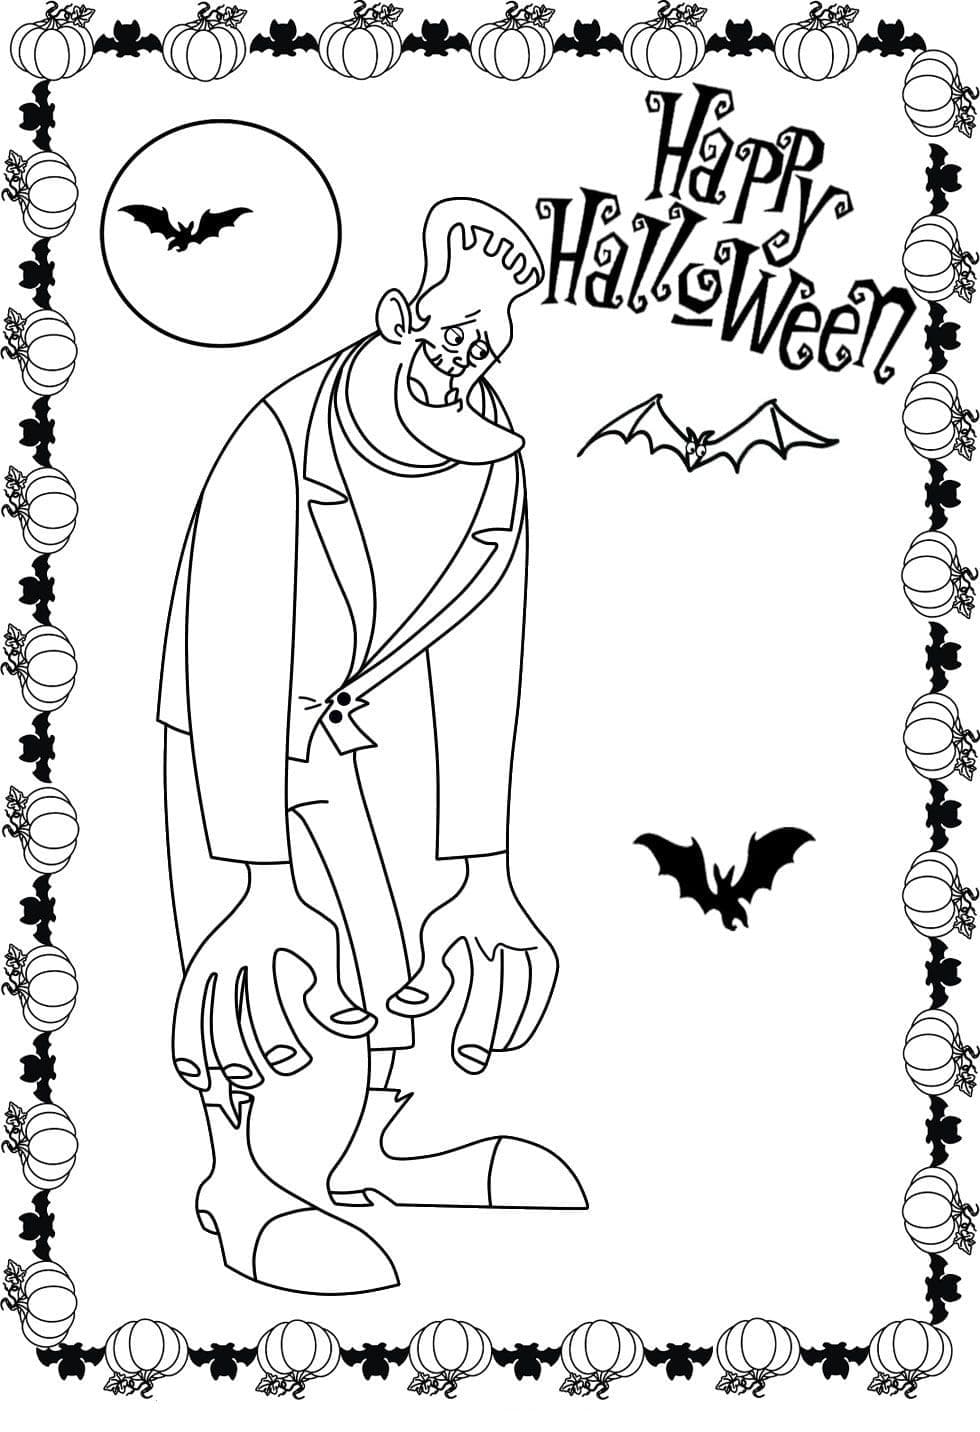 Halloween Frankenstein coloring page - Download, Print or Color Online ...